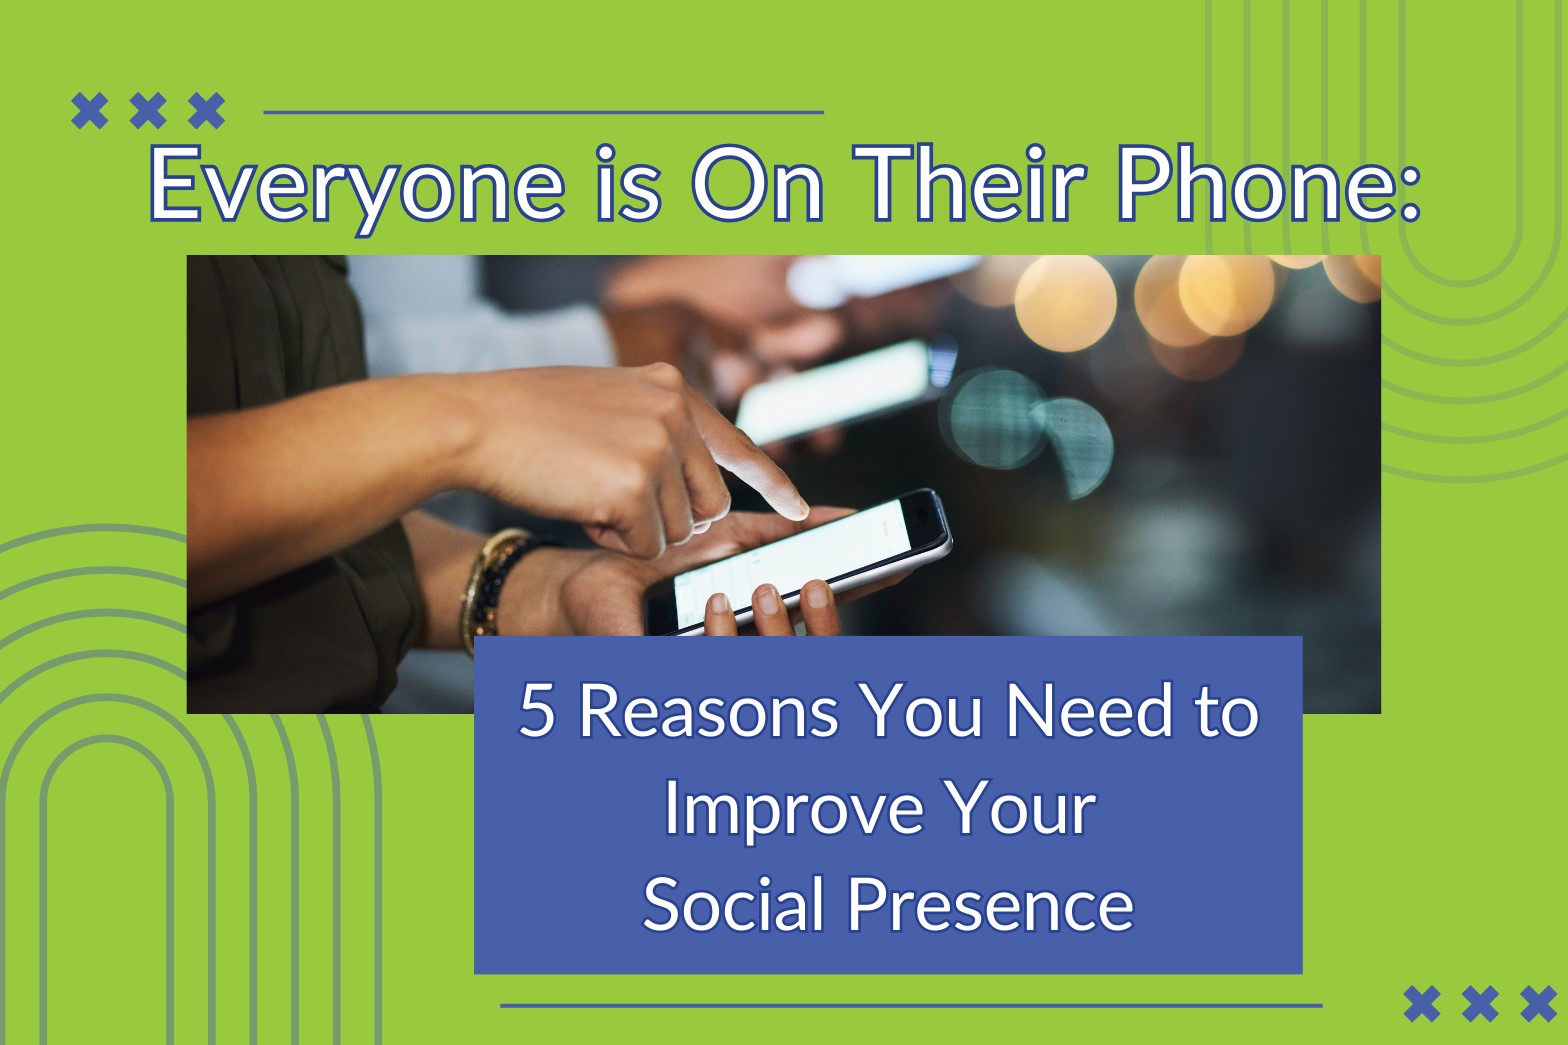 improve social presence